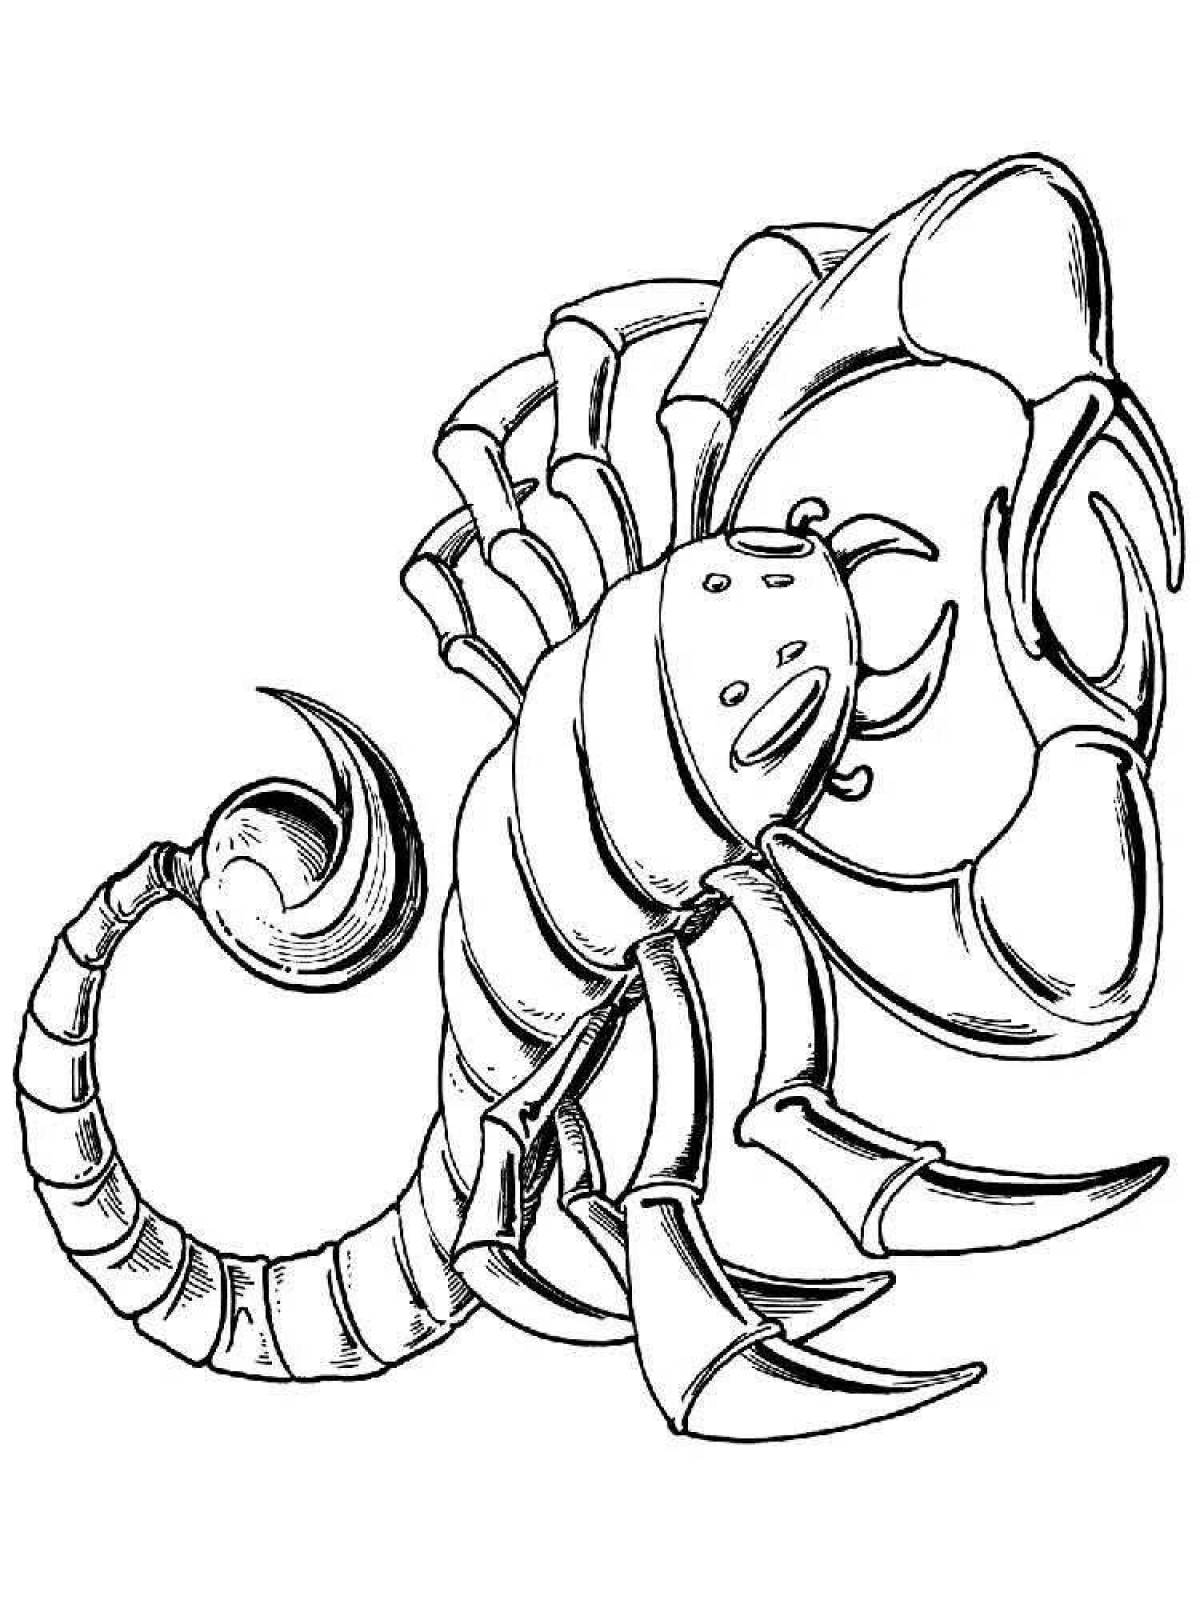 Elegant scorpion coloring page